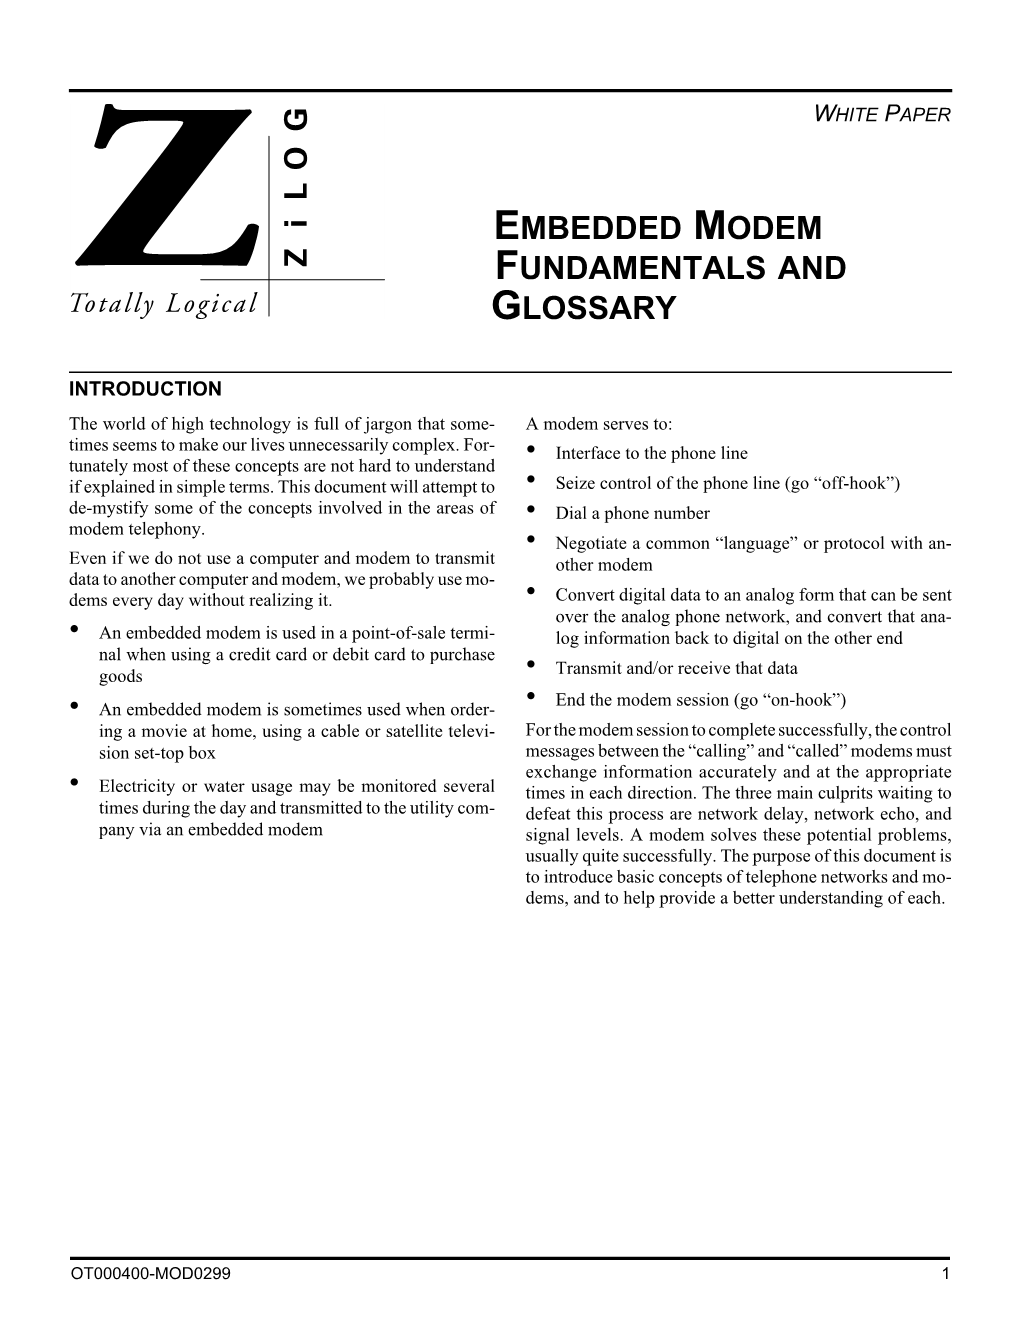 Embedded Modem Fundamentals White Paper